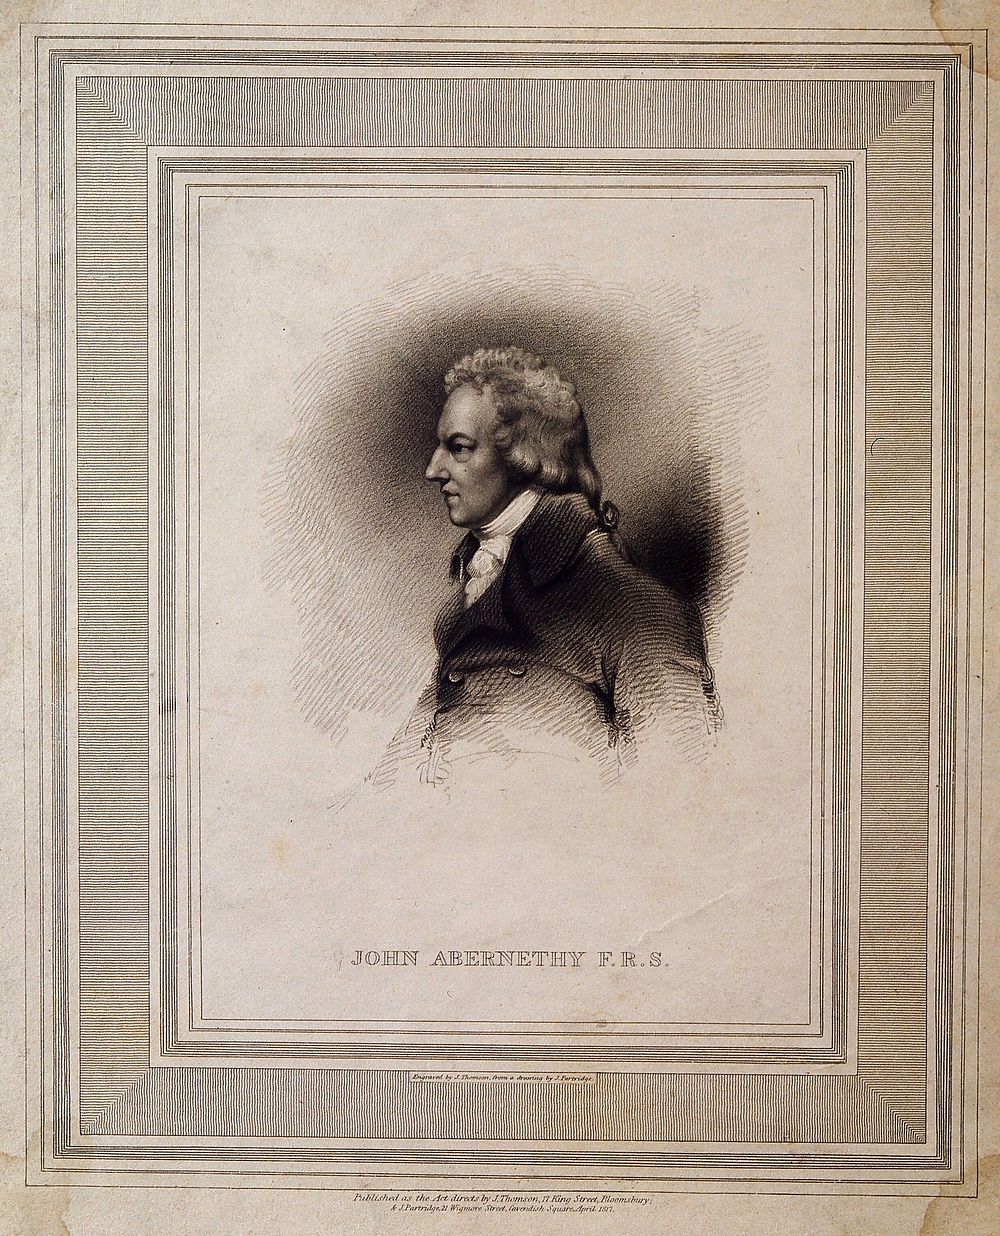 John Abernethy. Stipple engraving by J. Thomson after J. Partridge, 1817.